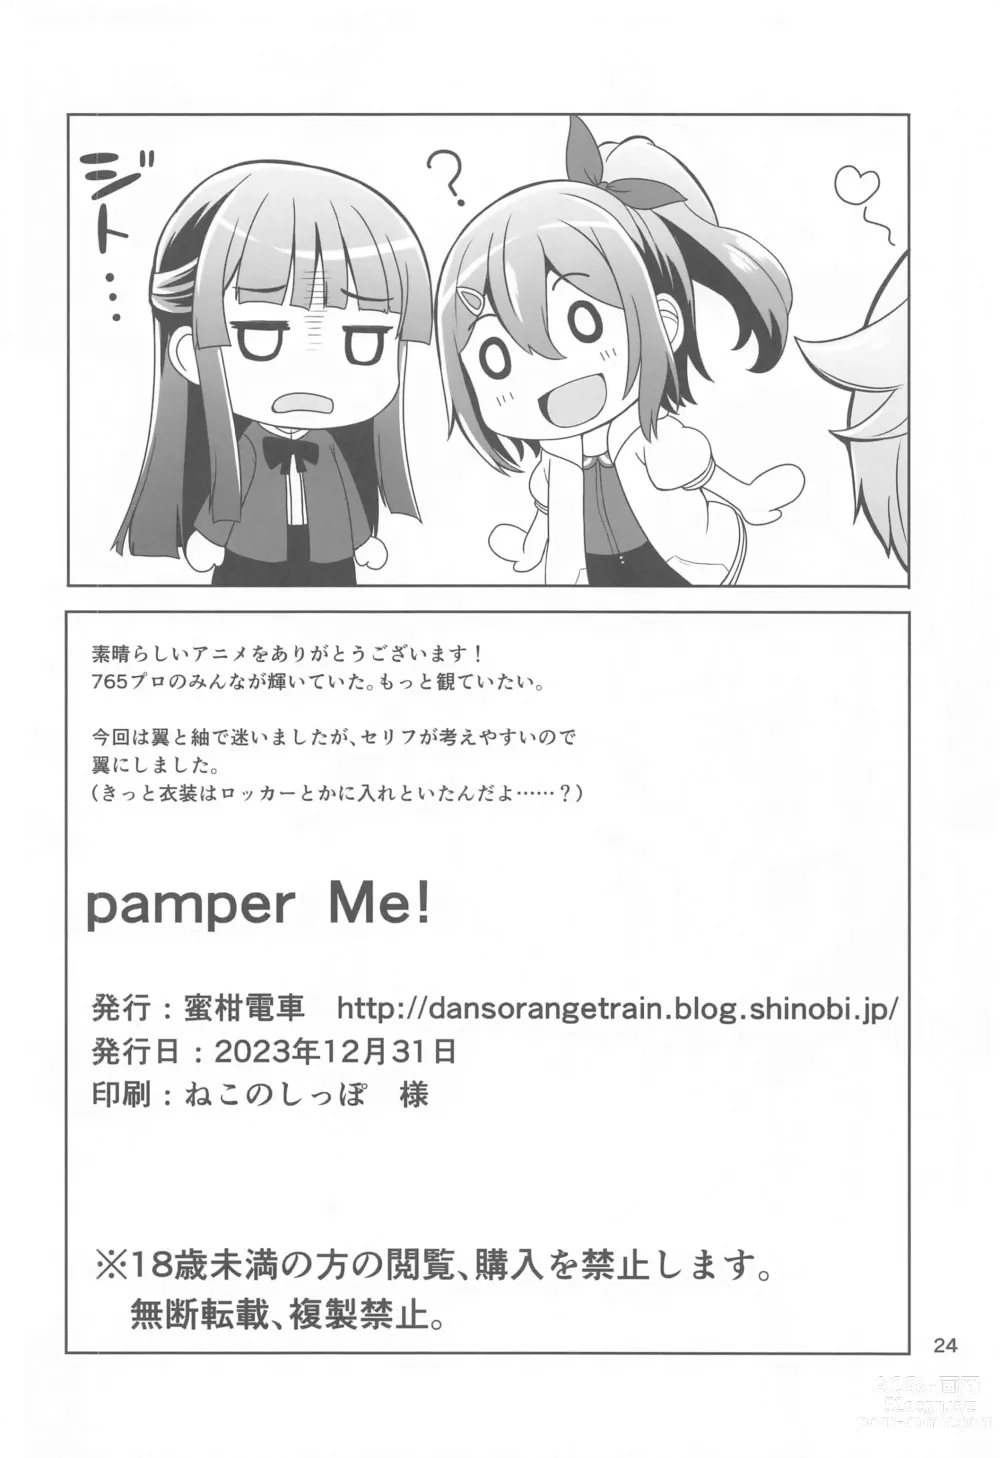 Page 25 of doujinshi pamper Me!